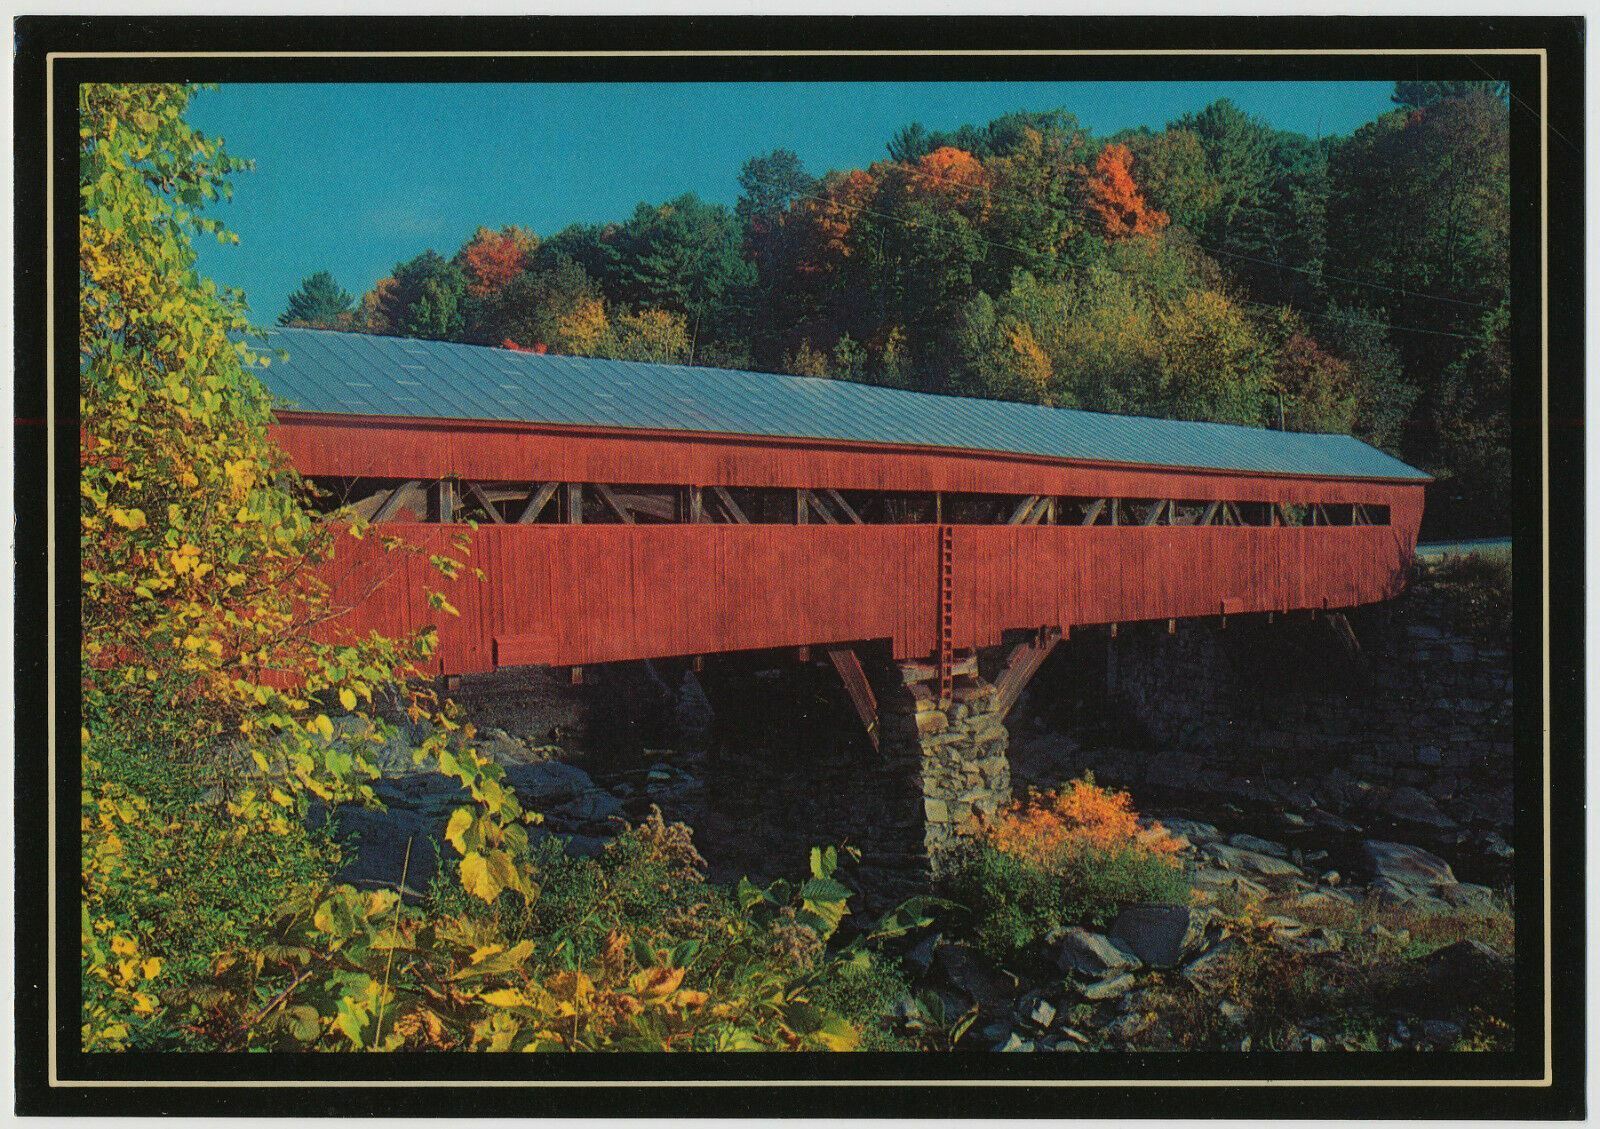 Taftsville Covered Bridge, Ottauquechee River, Woodstock, Vermont